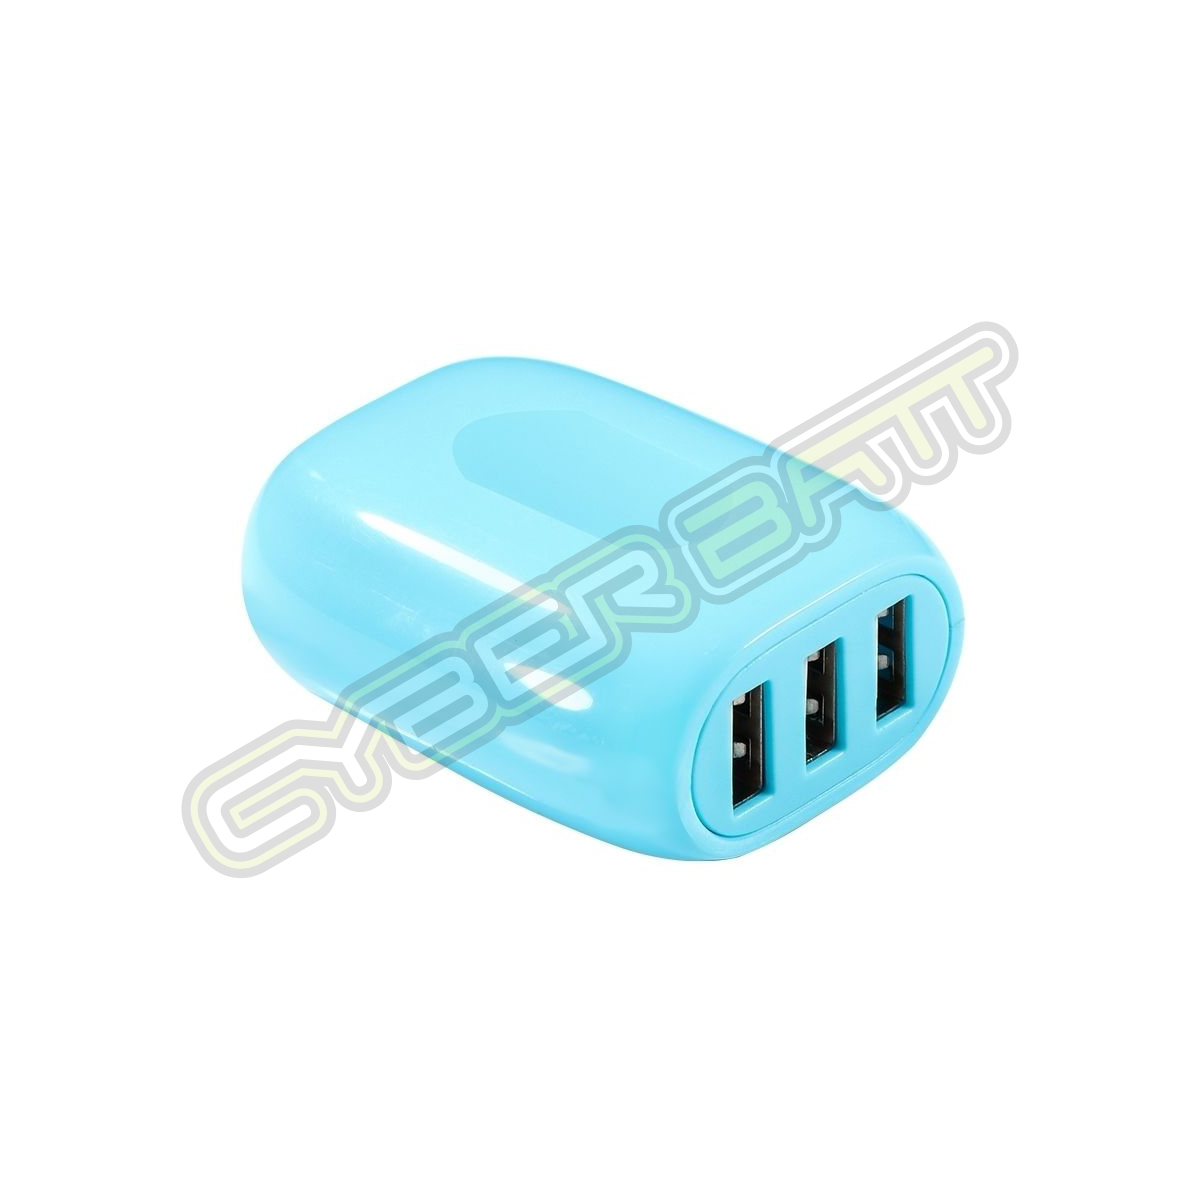 CHARGING L-M301 Portable 5V/3.1A 3-USB Port Smart Quick Charge for Smartphones & Tablets & Power Bank Joyroom (Blue)